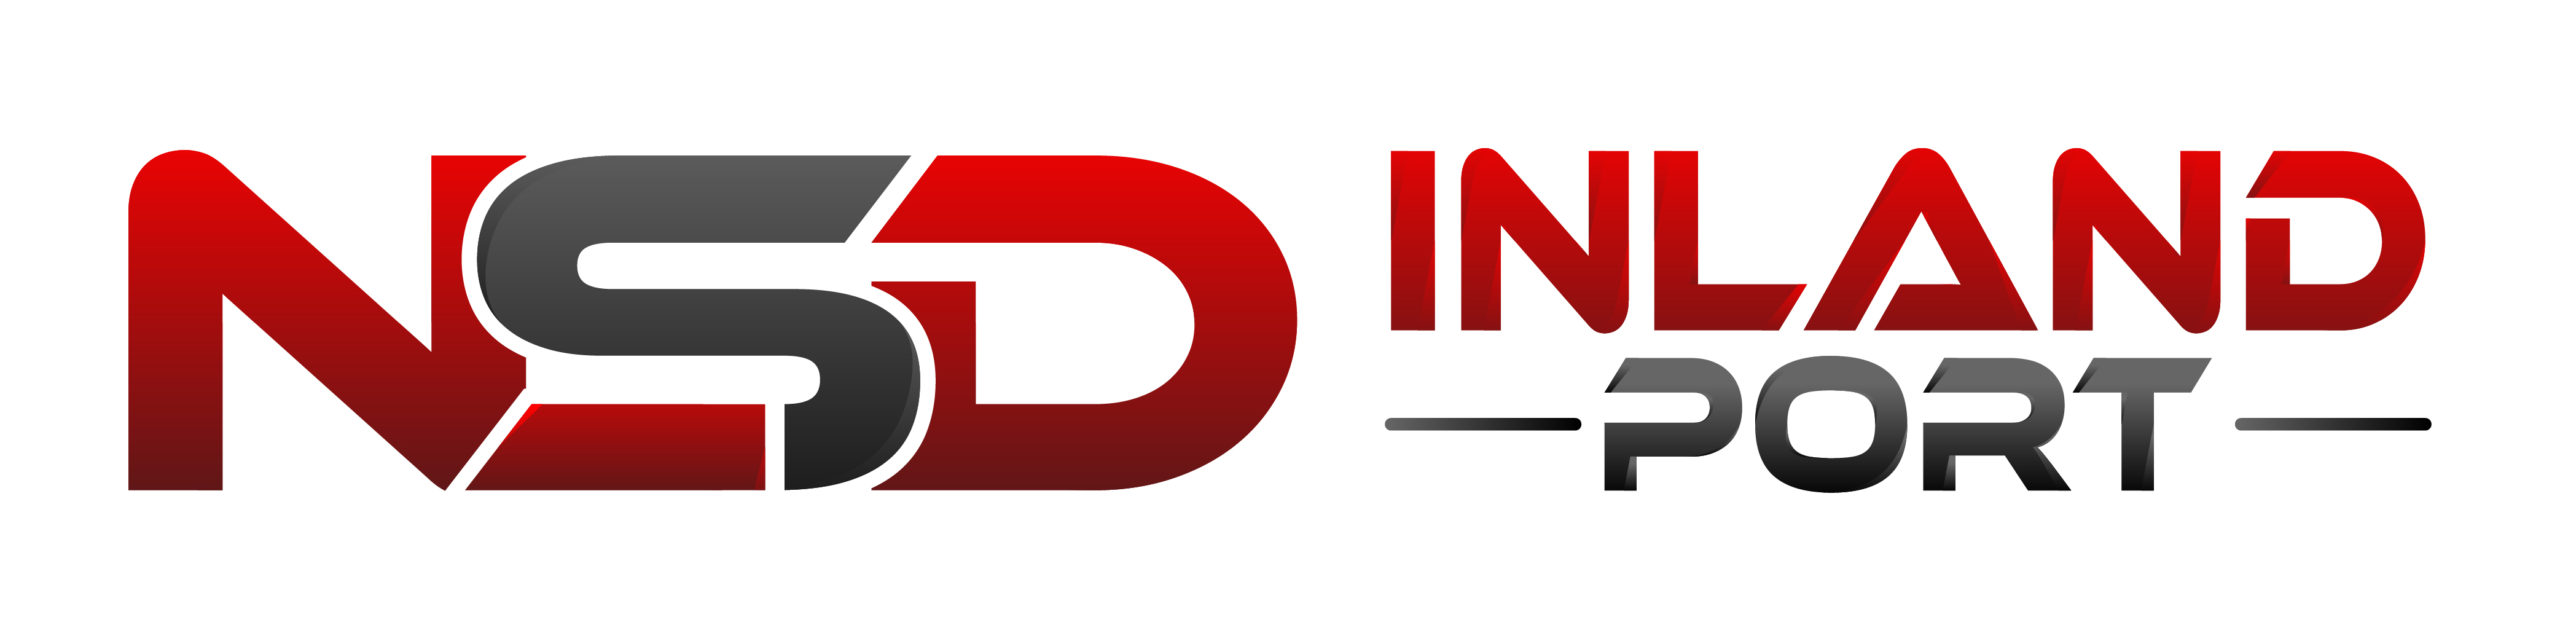 NSD Logo -Horz-header-1000px